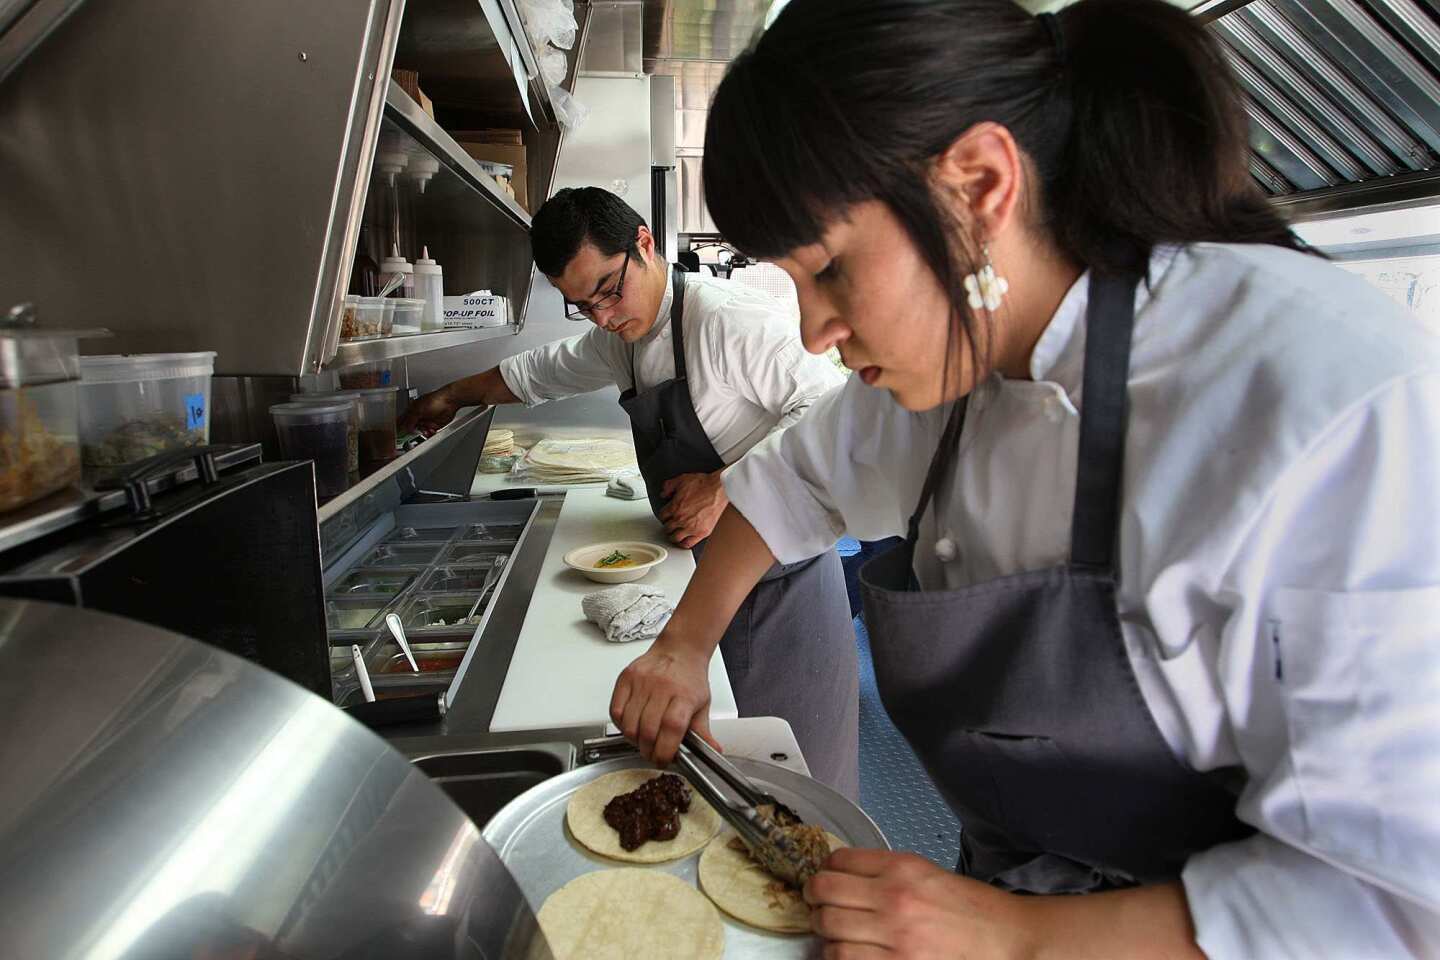 Carlos Salgado and Andrea Machuca prepare orders inside the truck, which also helps in Salgado's catering business.